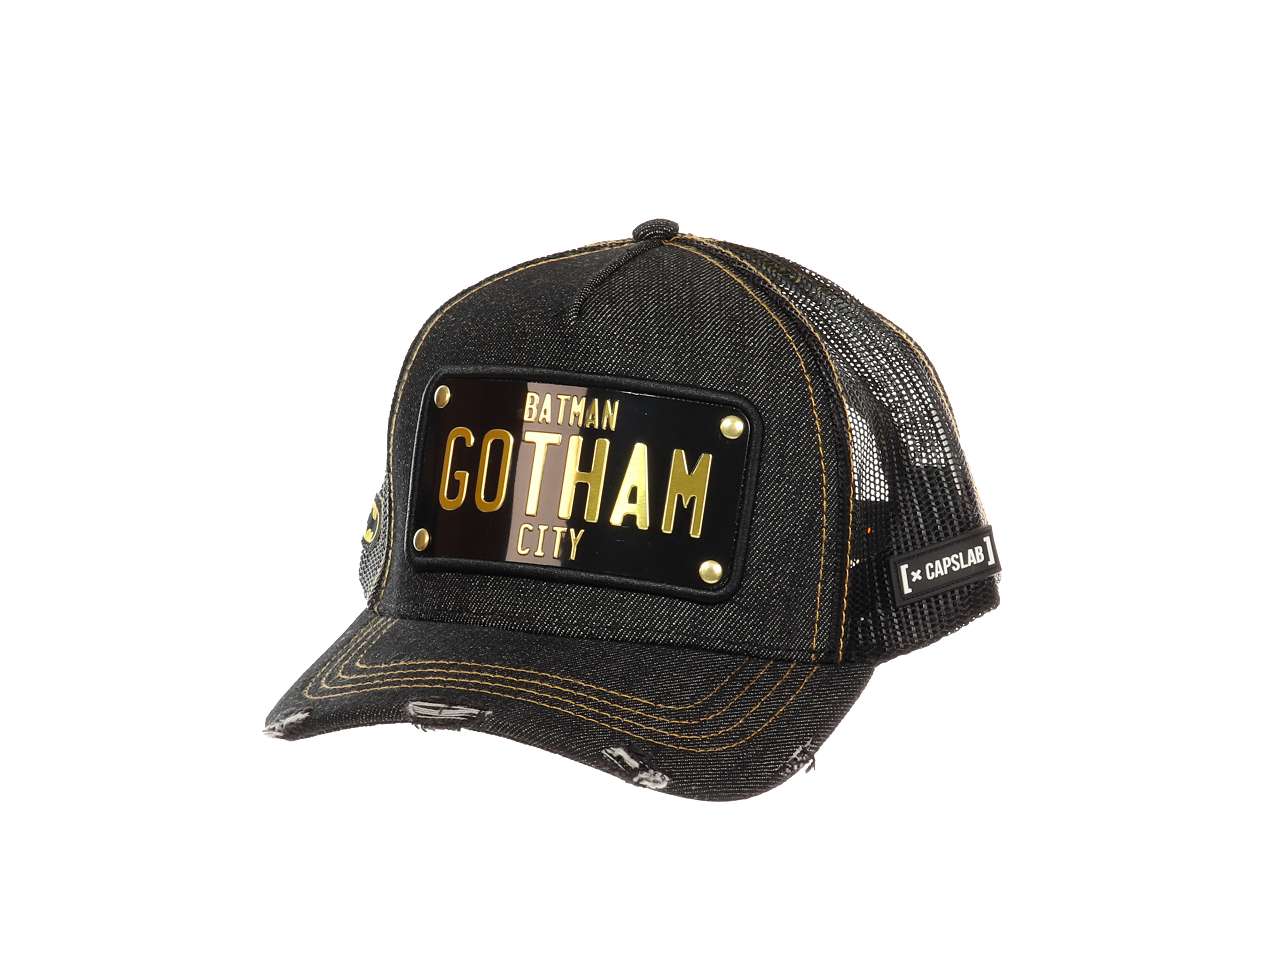 Batman DC Gotham City Black Plate Gold Used Trucker Cap Capslab